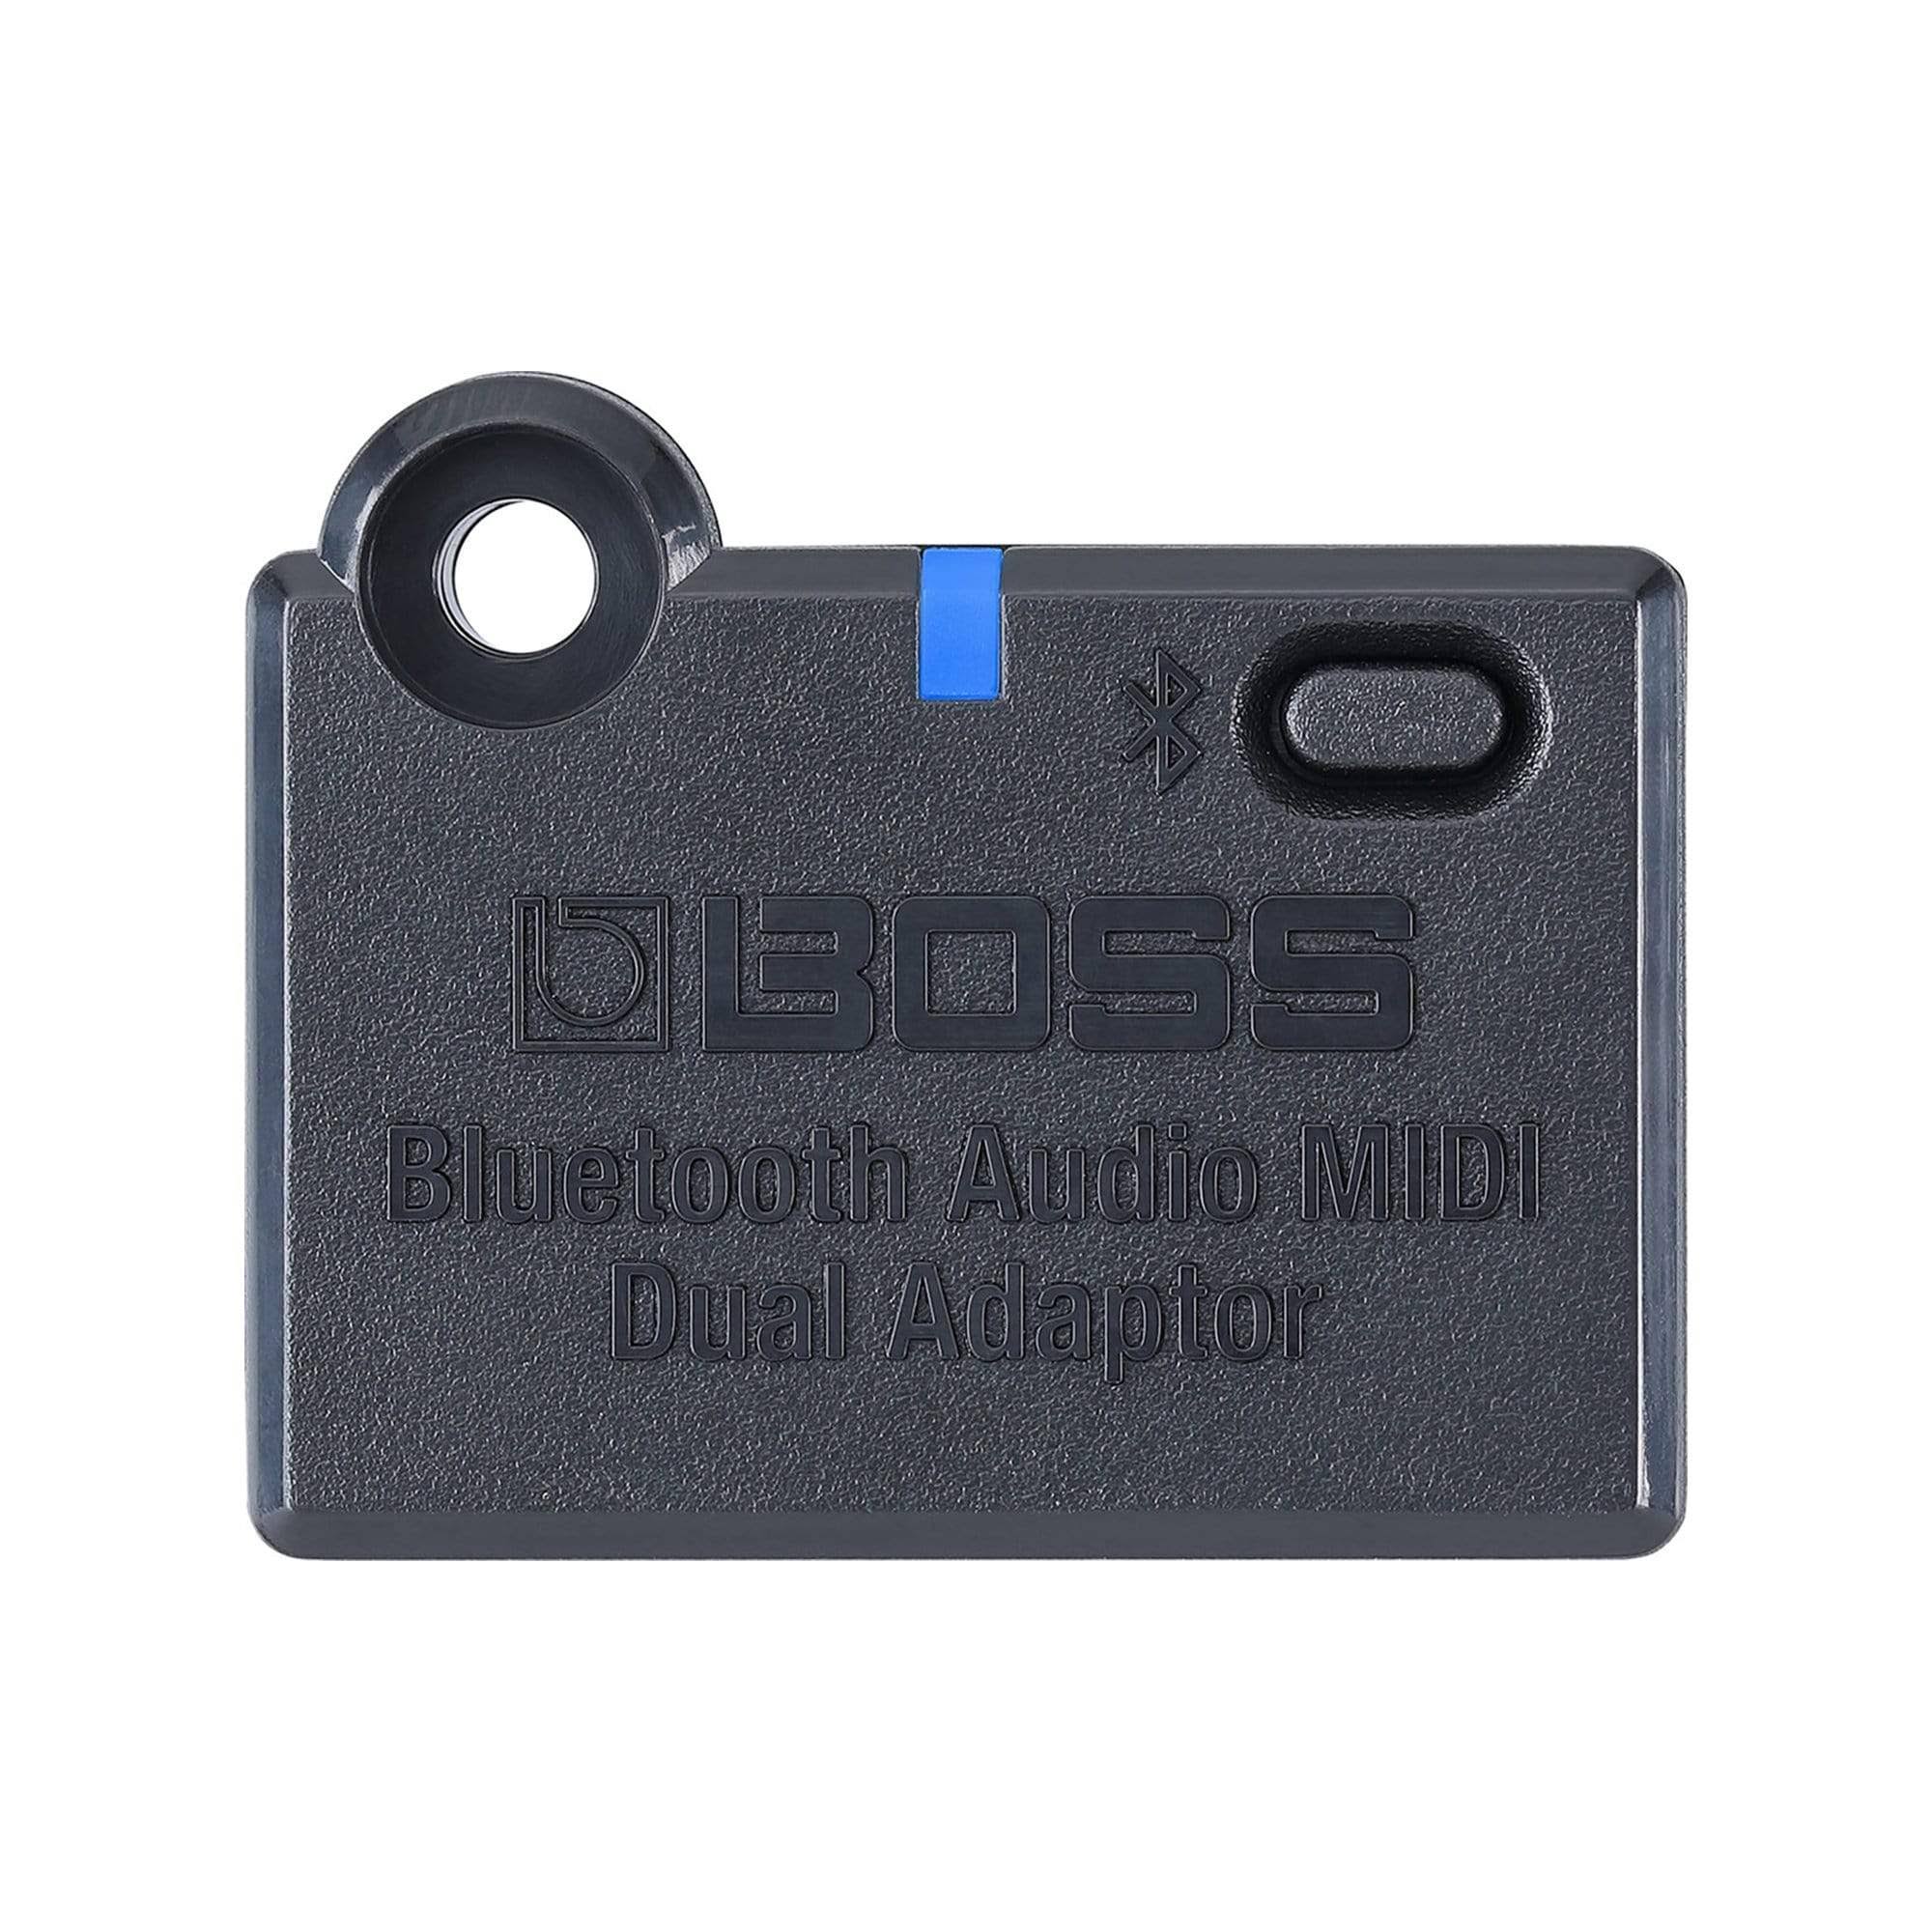 Boss BT-DUAL Bluetooth Audio MIDI Adaptor